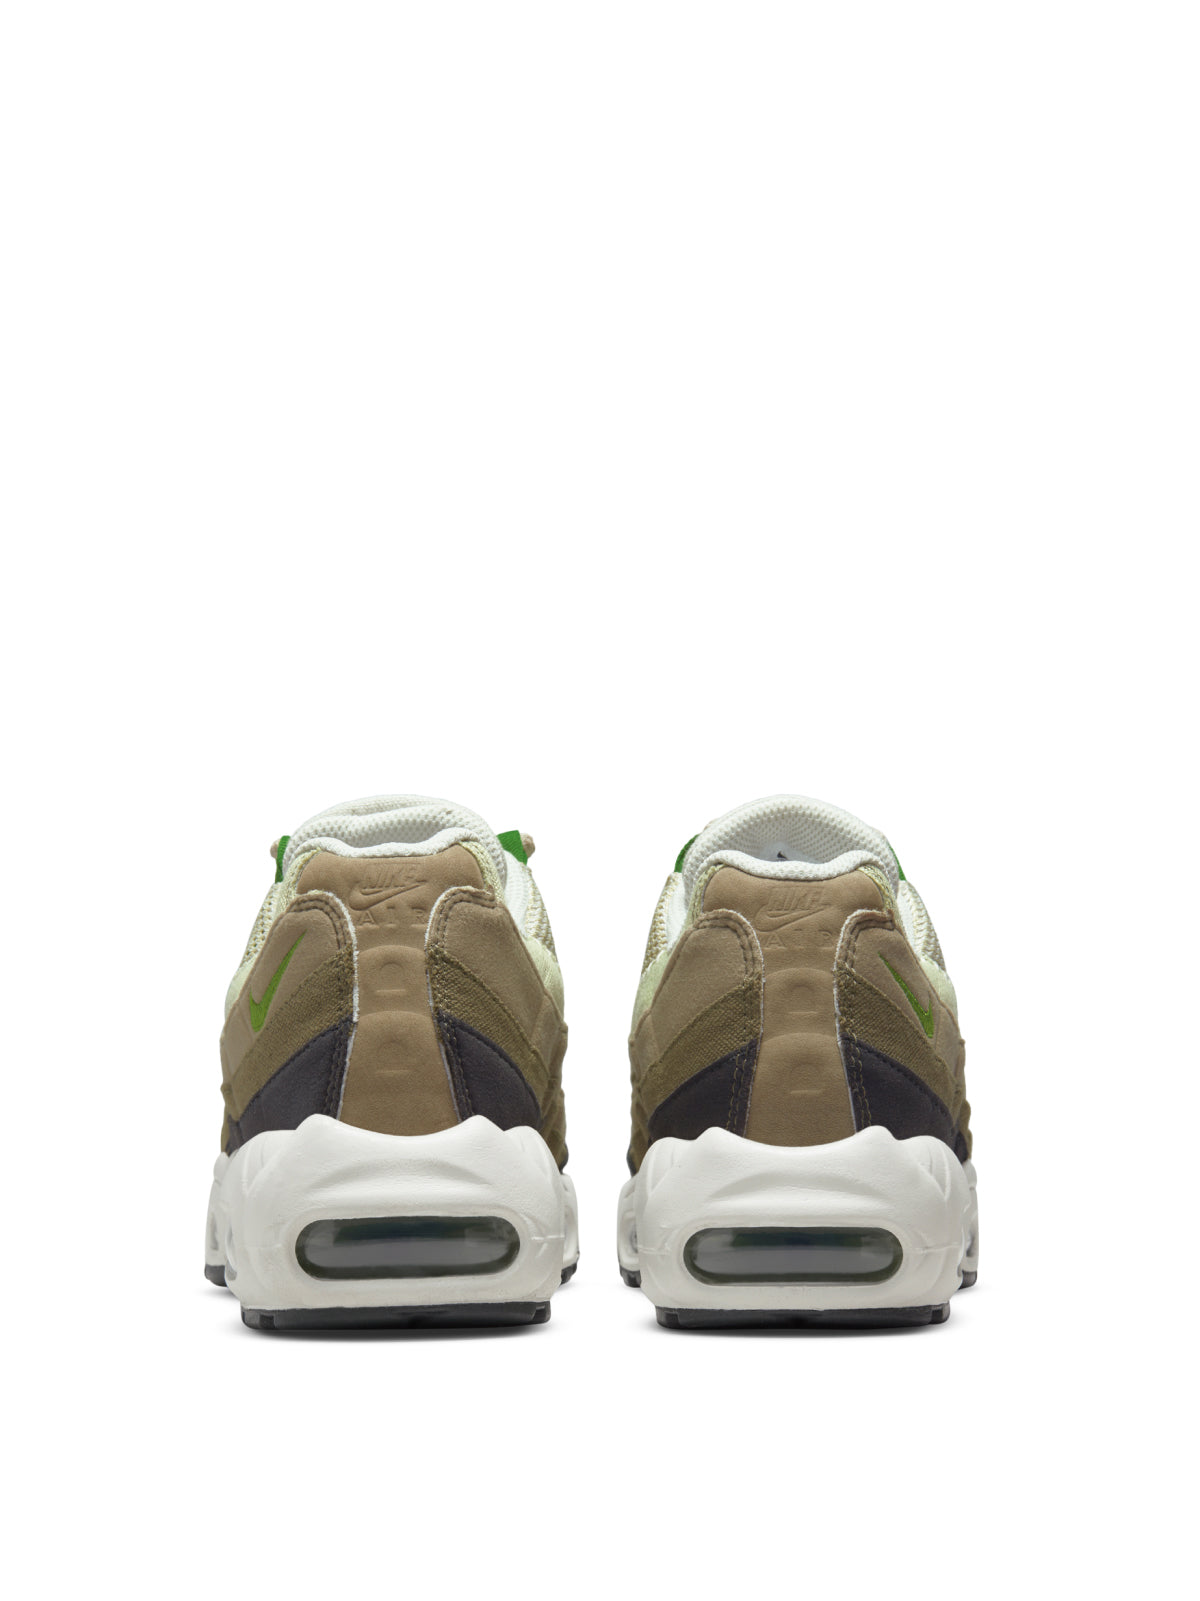 Air Max 95 Chlorophyll Sneakers